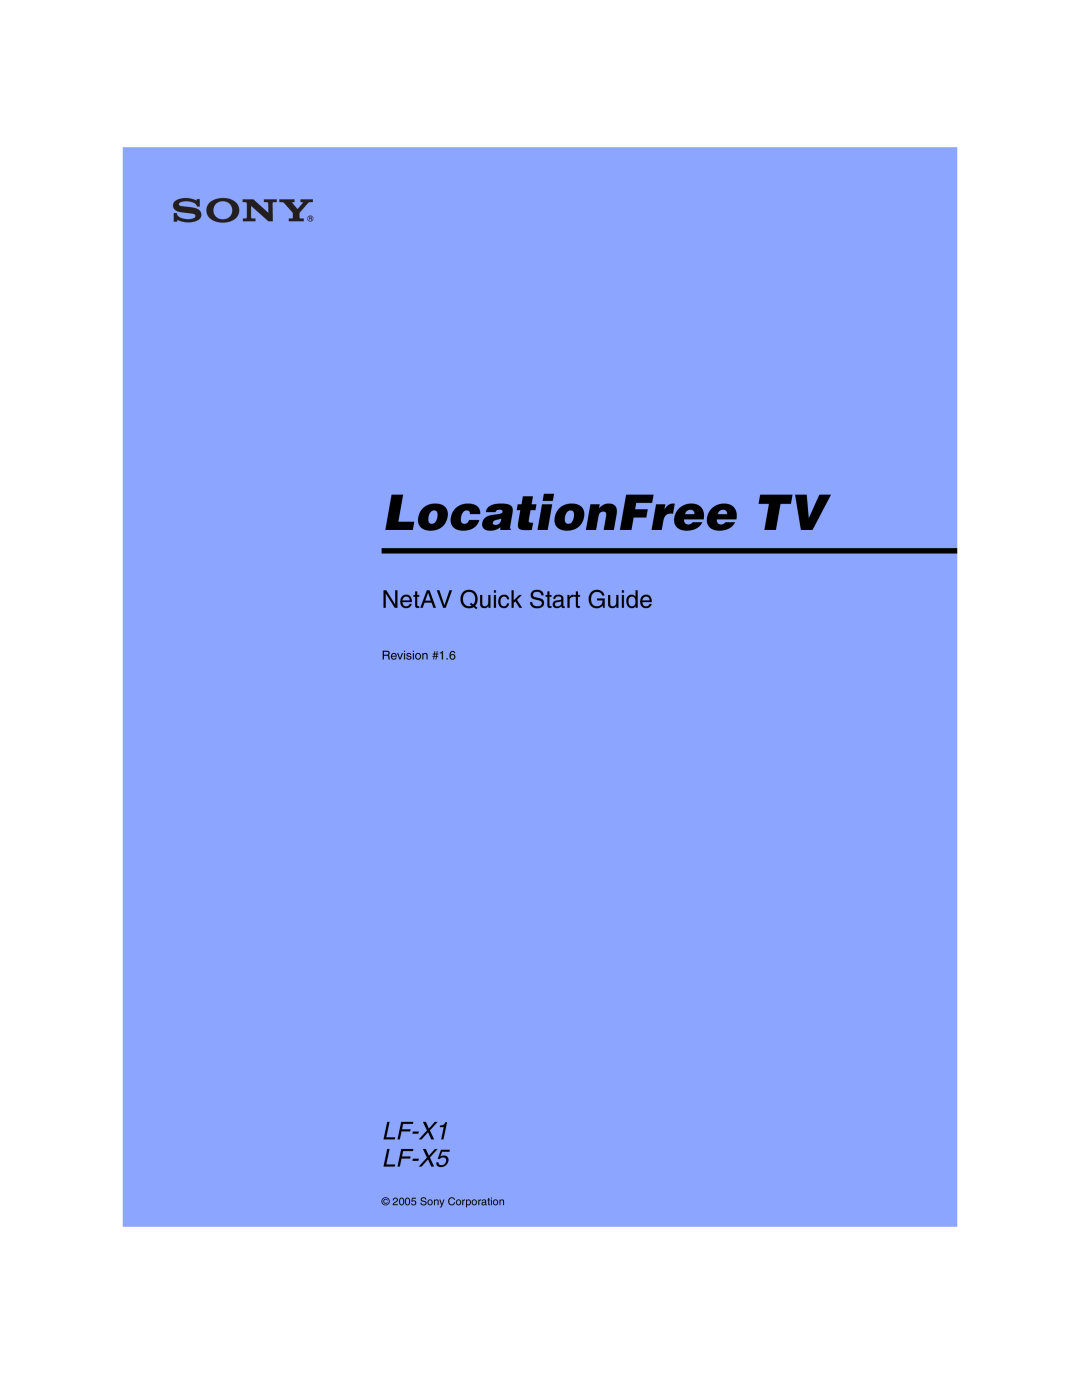 Sony 412, TV Receiver quick start LocationFree TV, NetAV Quick Start Guide, LF-X1 LF-X5, Revision #1.6, Sony Corporation 